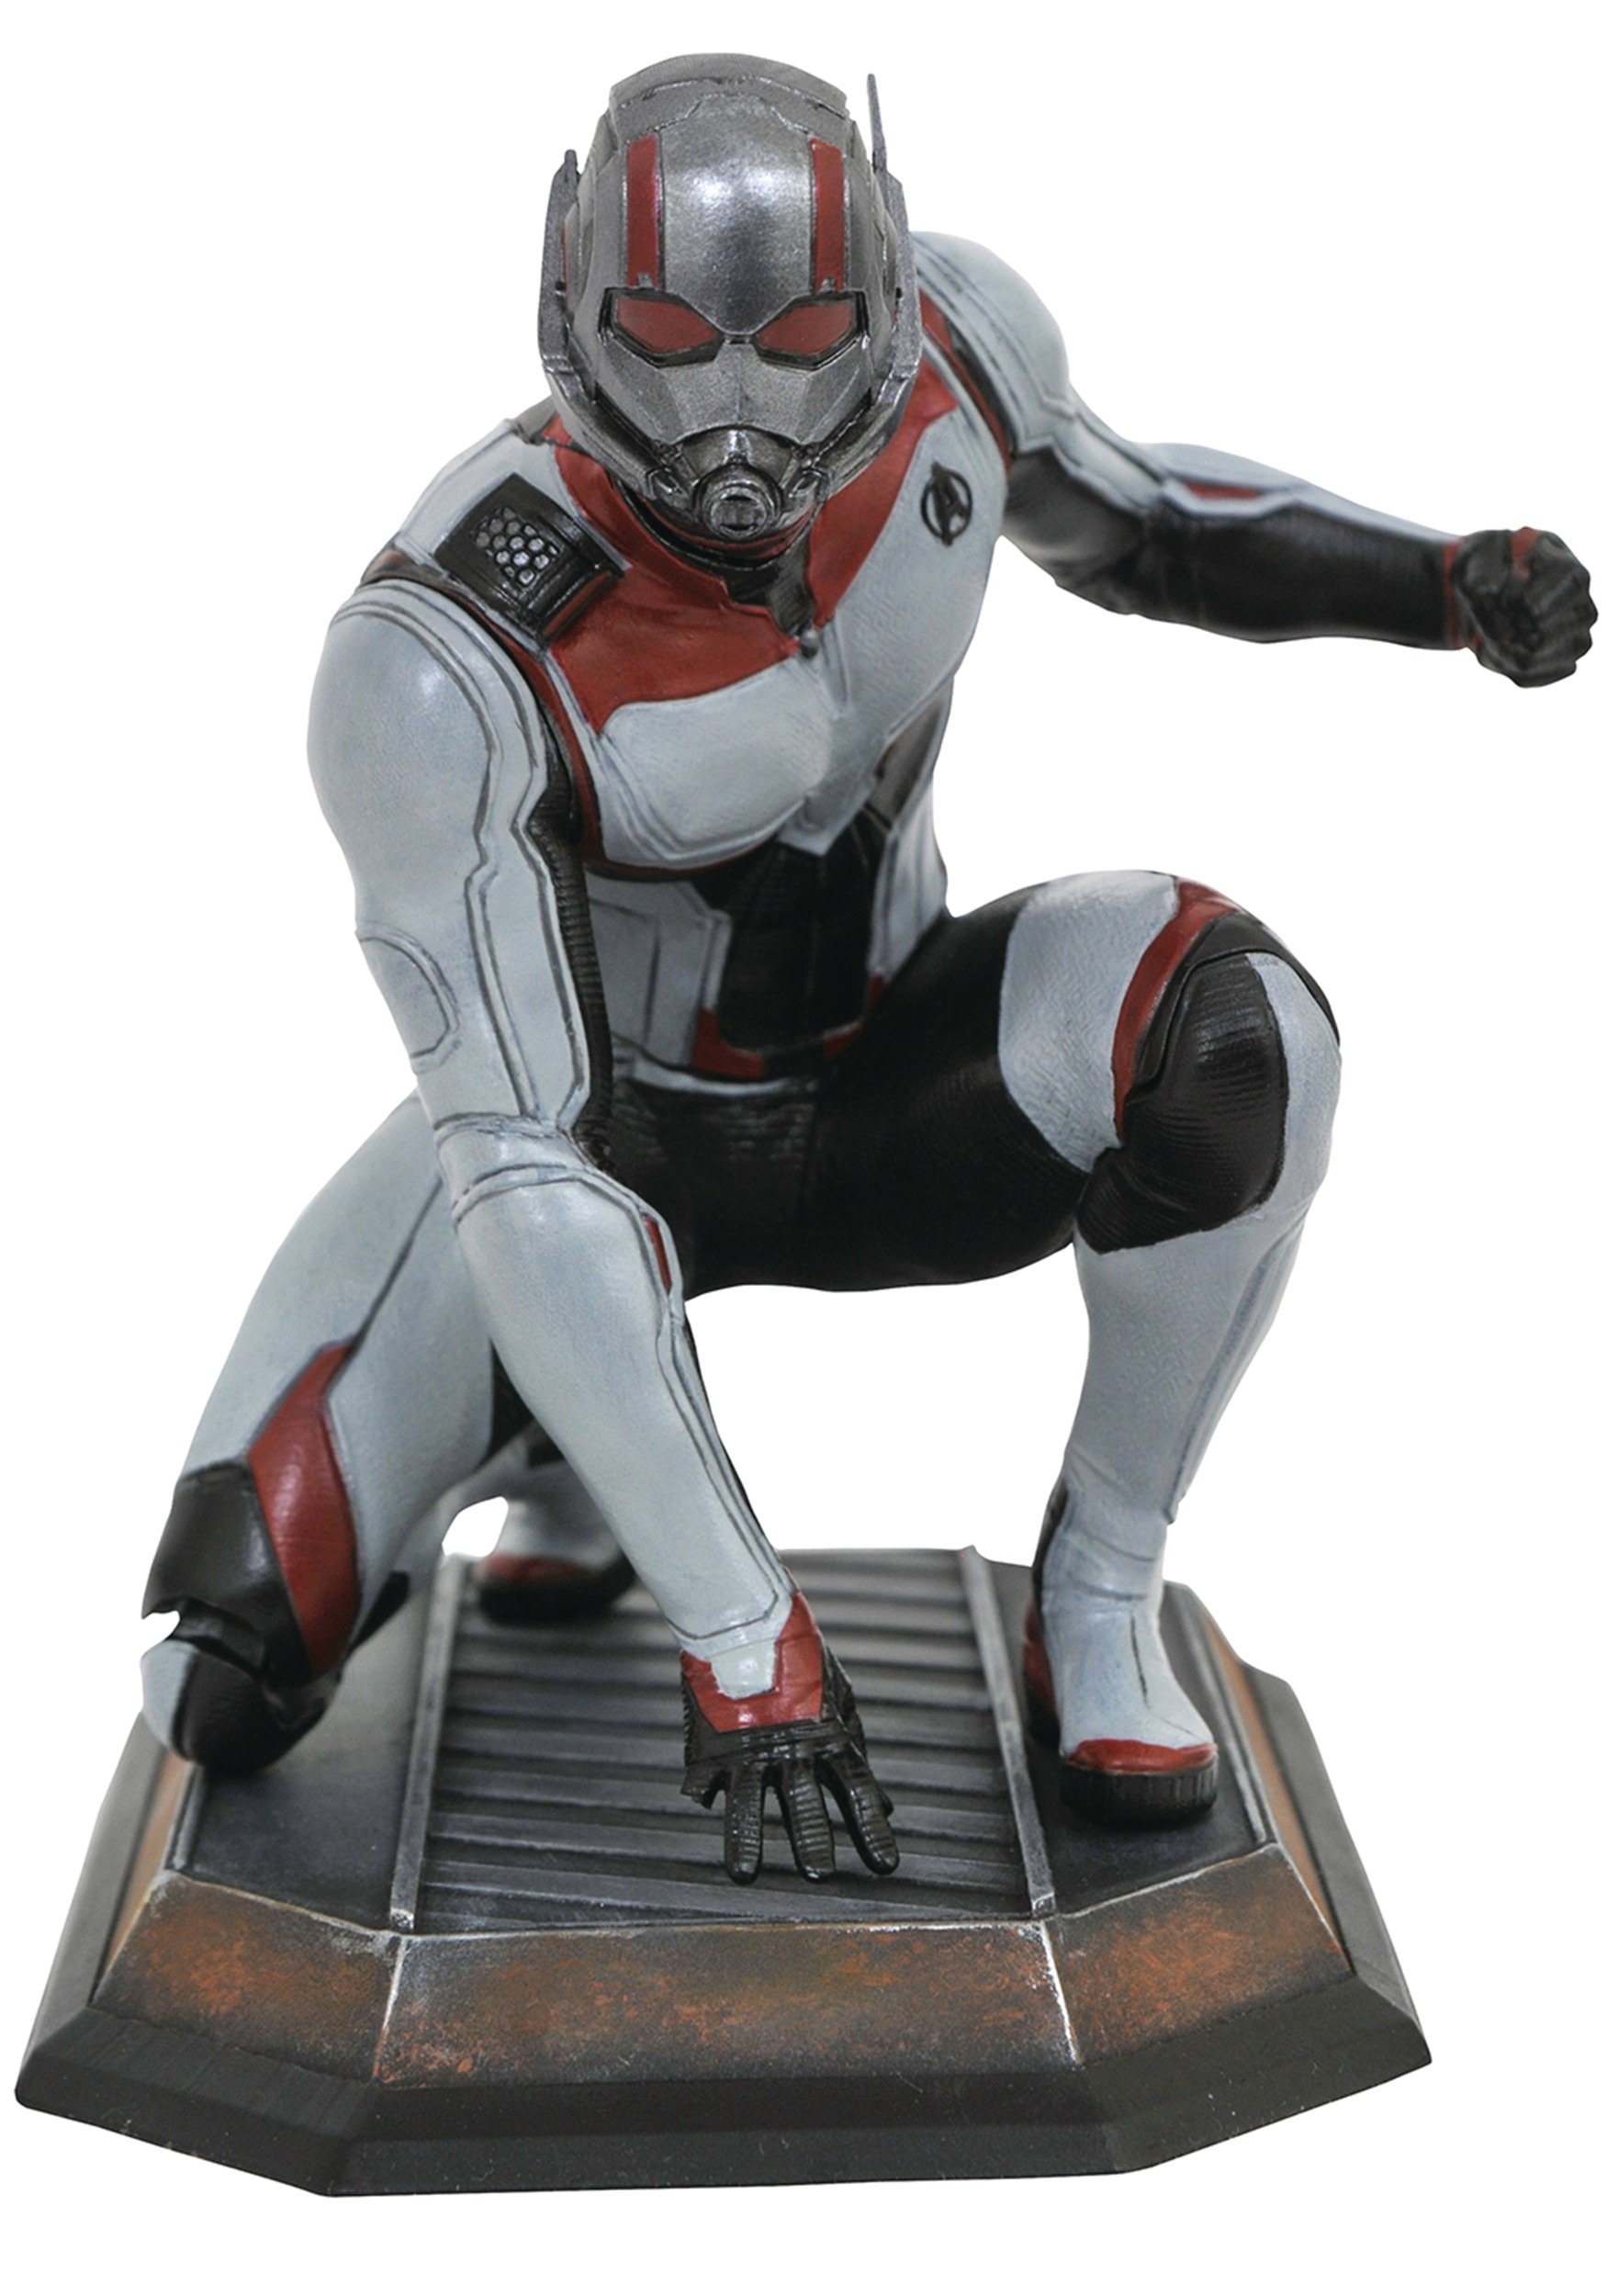 Marvel Gallery Avengers Endgame Quantum Realm Action Ant-Man Figurine